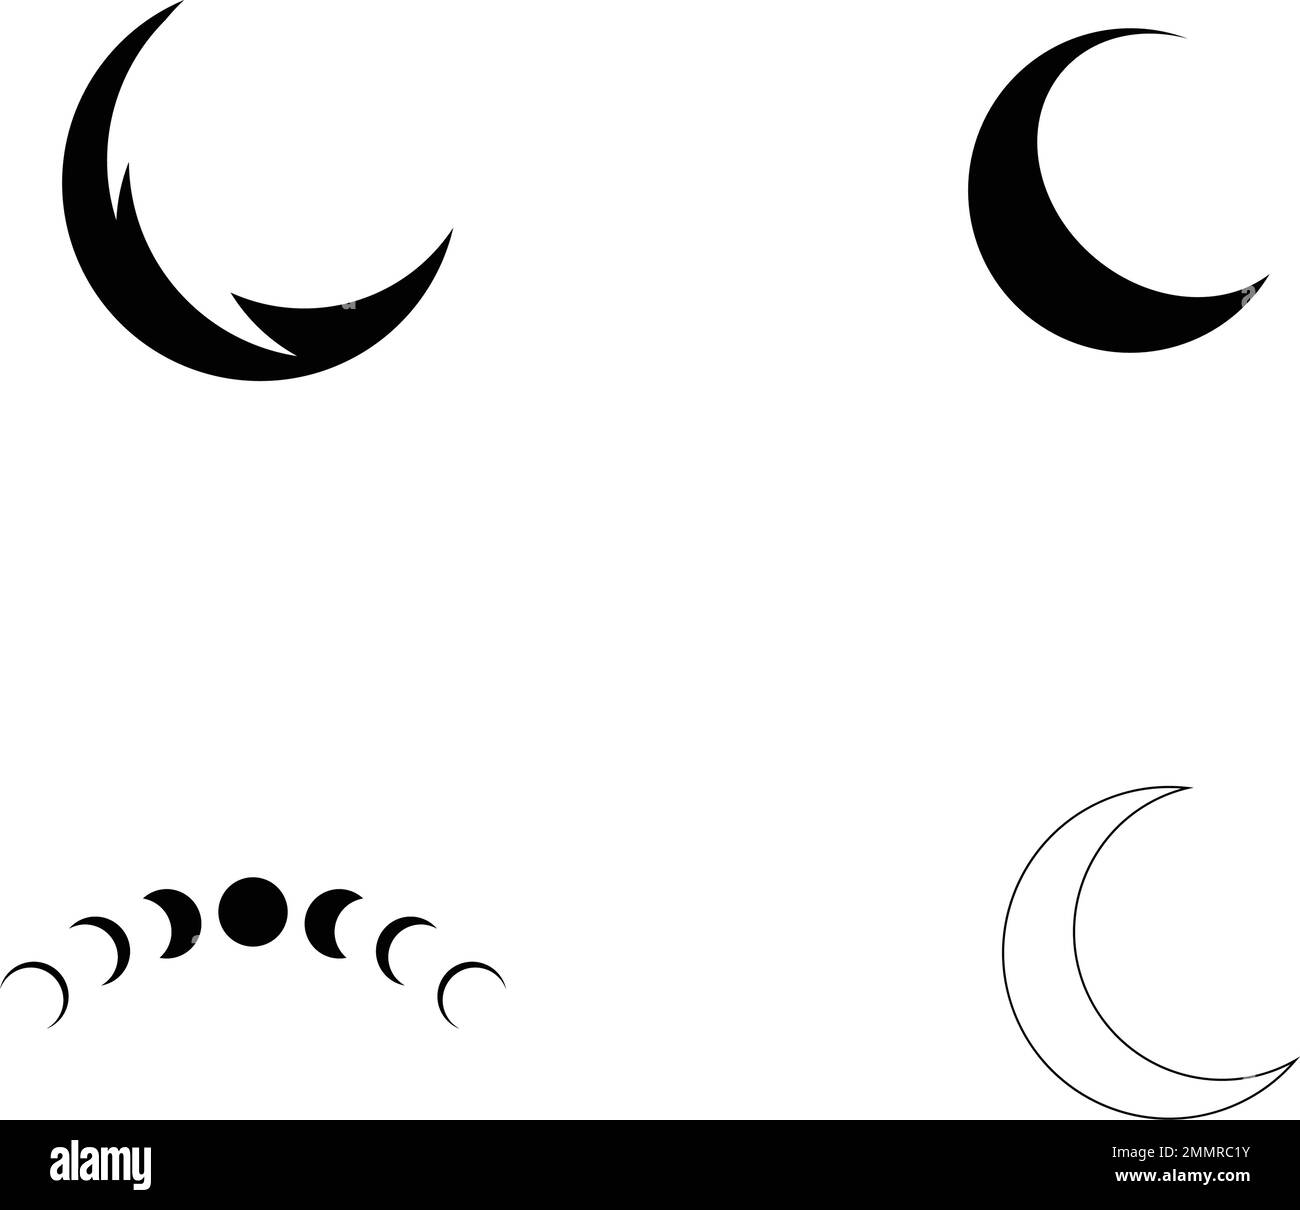 moon logo stock illustration design Stock Vector